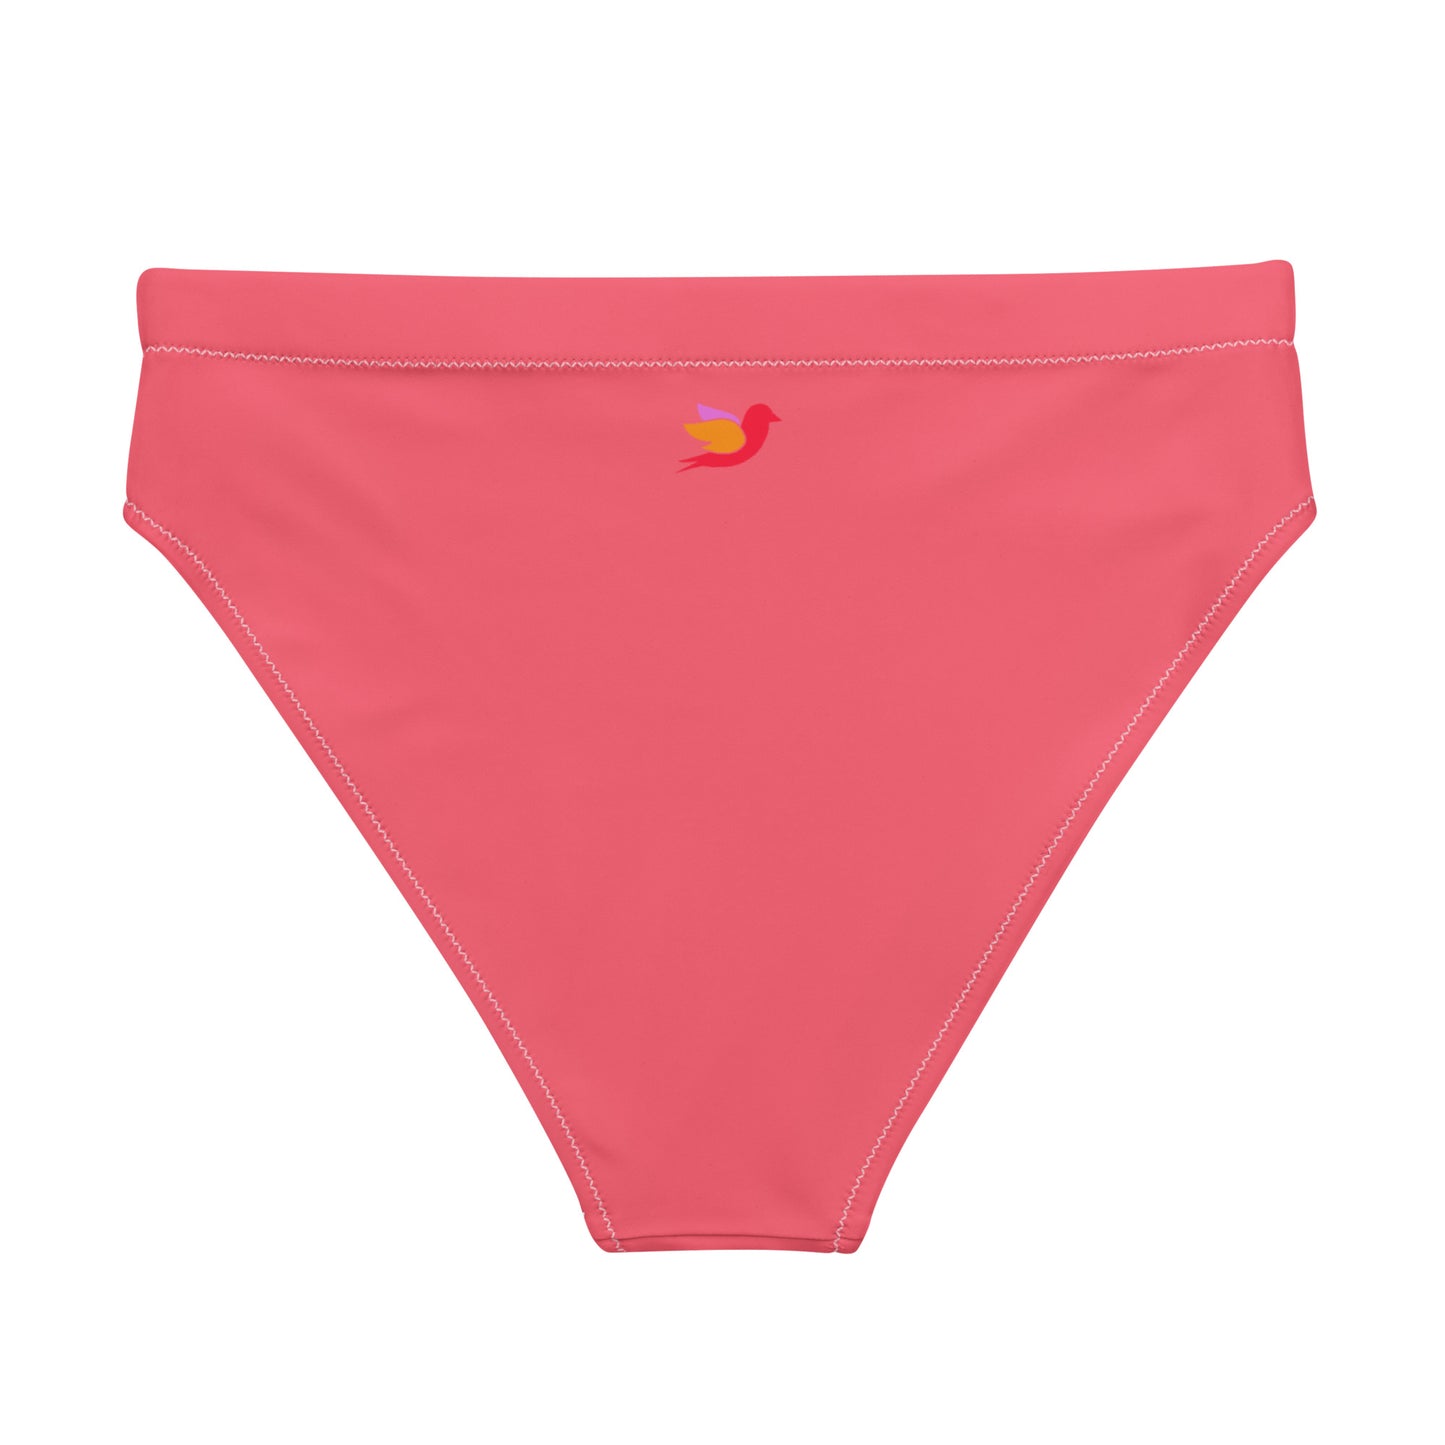 Cueva Solid Pink Recycled Mid-Rise Cheeky Bikini Bottom